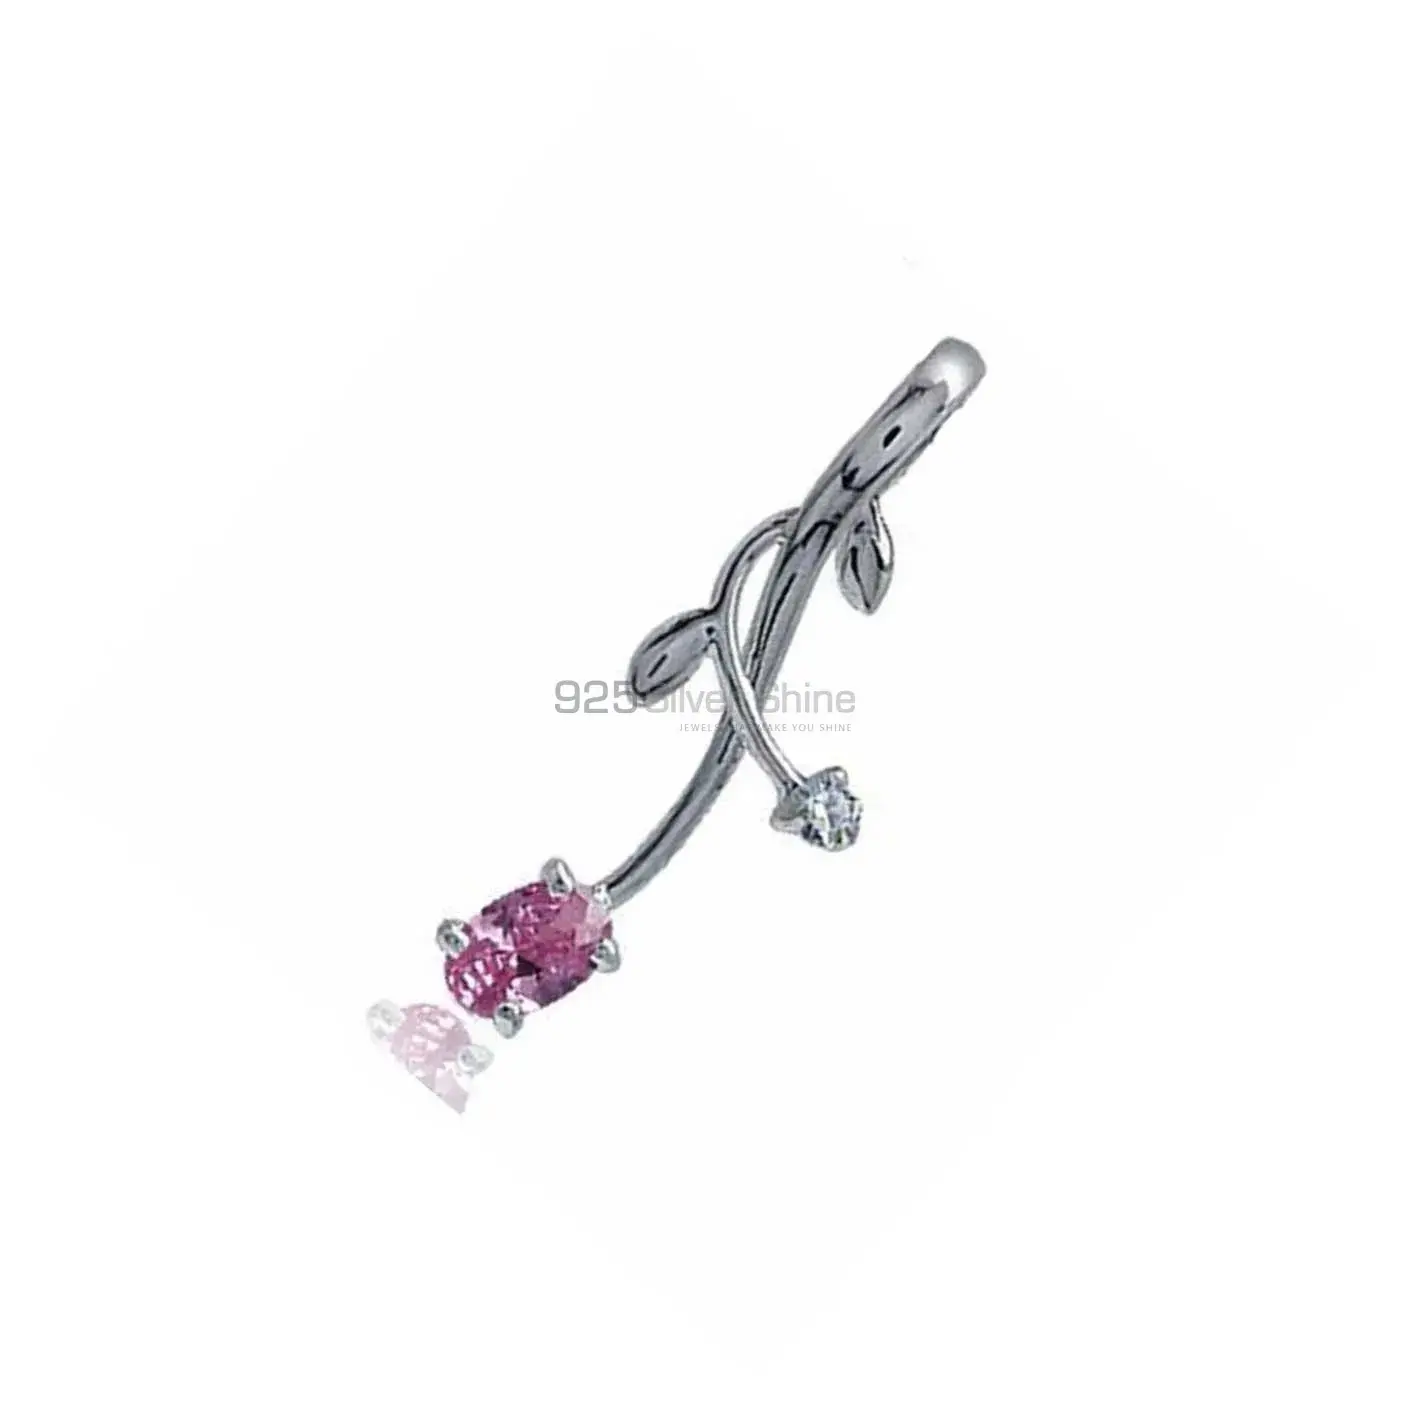 Best Quality 925 Sterling Silver Handmade Pendants In Pink Tourmaline Gemstone Jewelry 925SP05_1